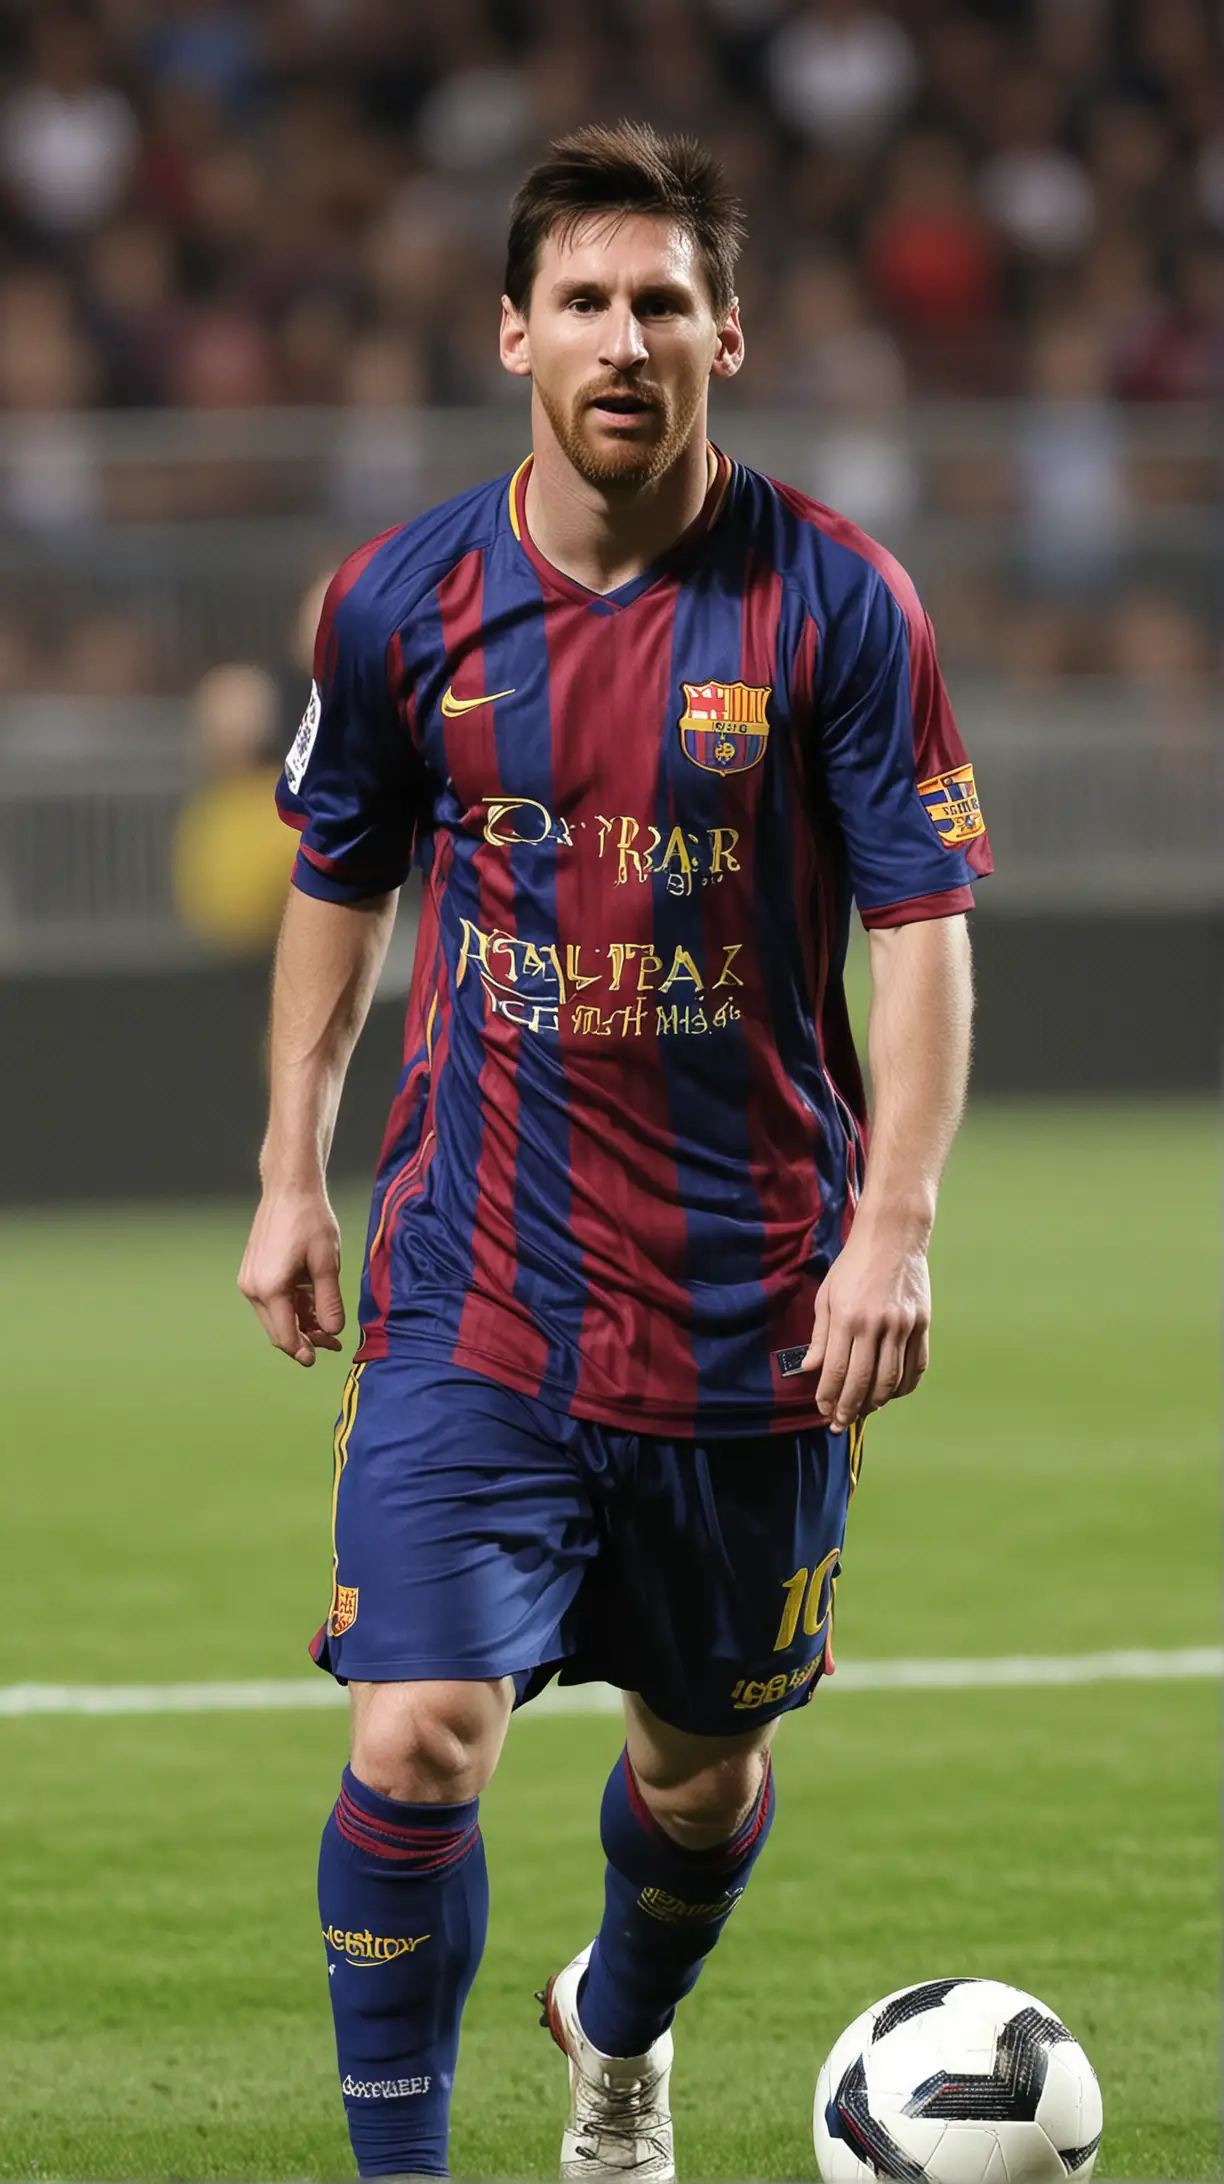 Lionel Messi Football Legend Born in 1987